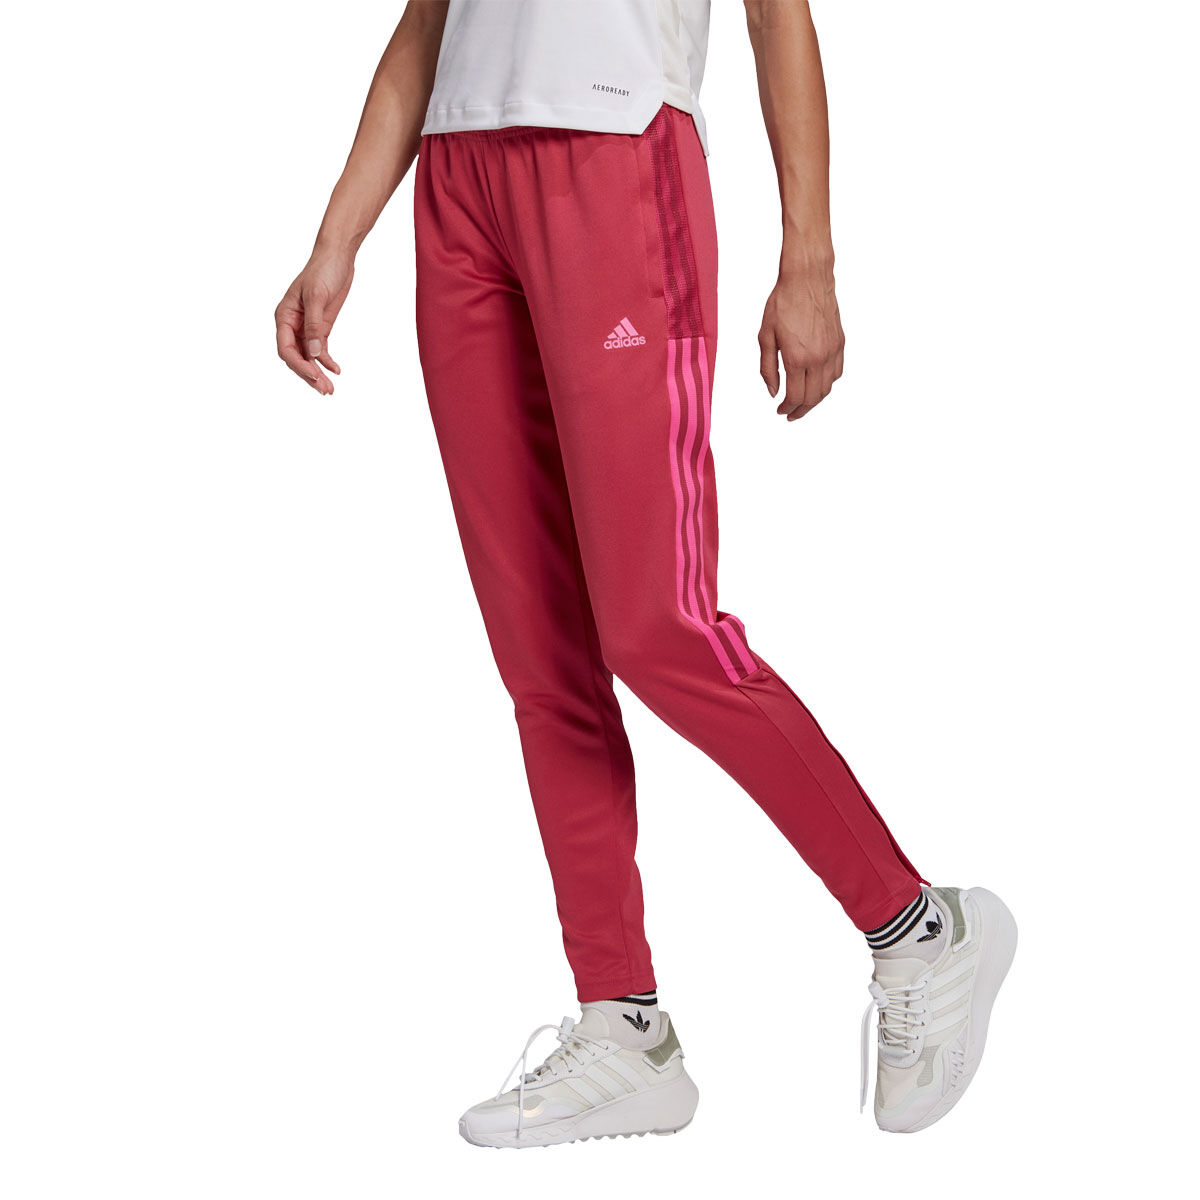 Buy > adidas track pants rebel sport > in stock